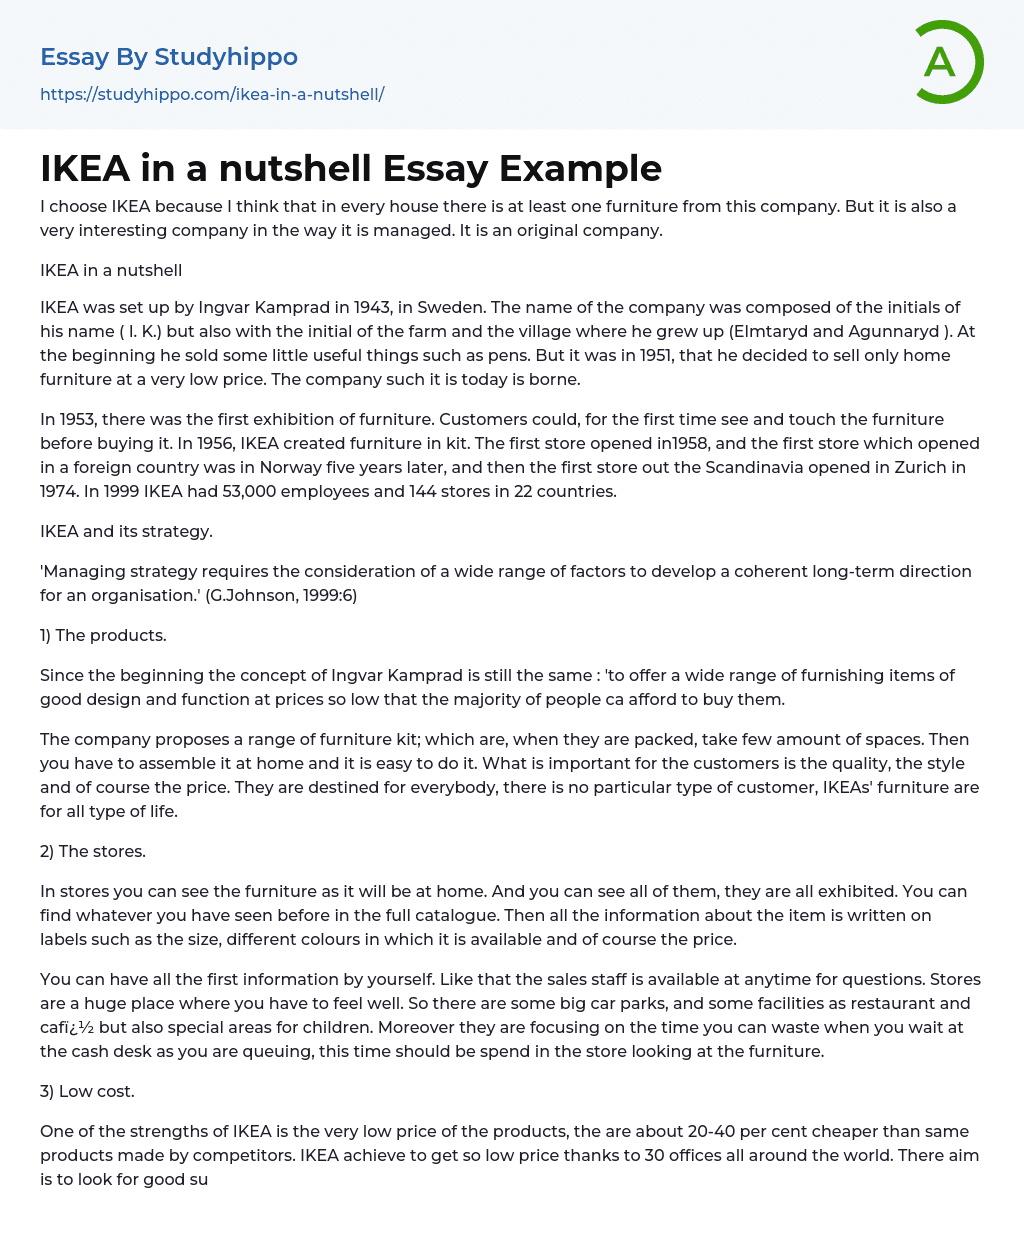 IKEA in a nutshell Essay Example